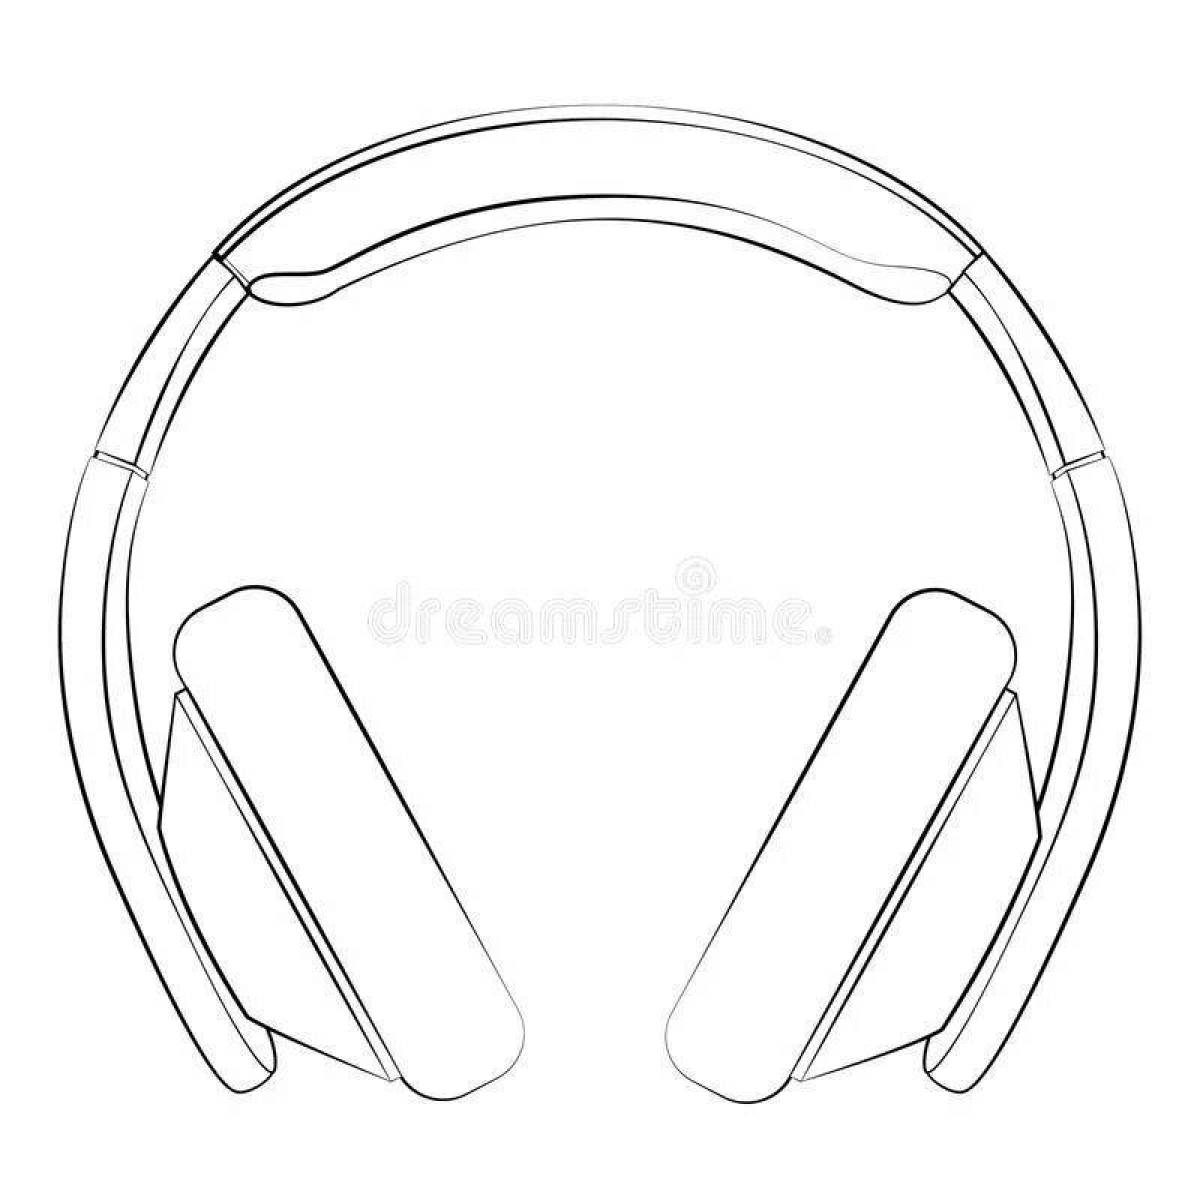 Fun coloring of wireless headphones